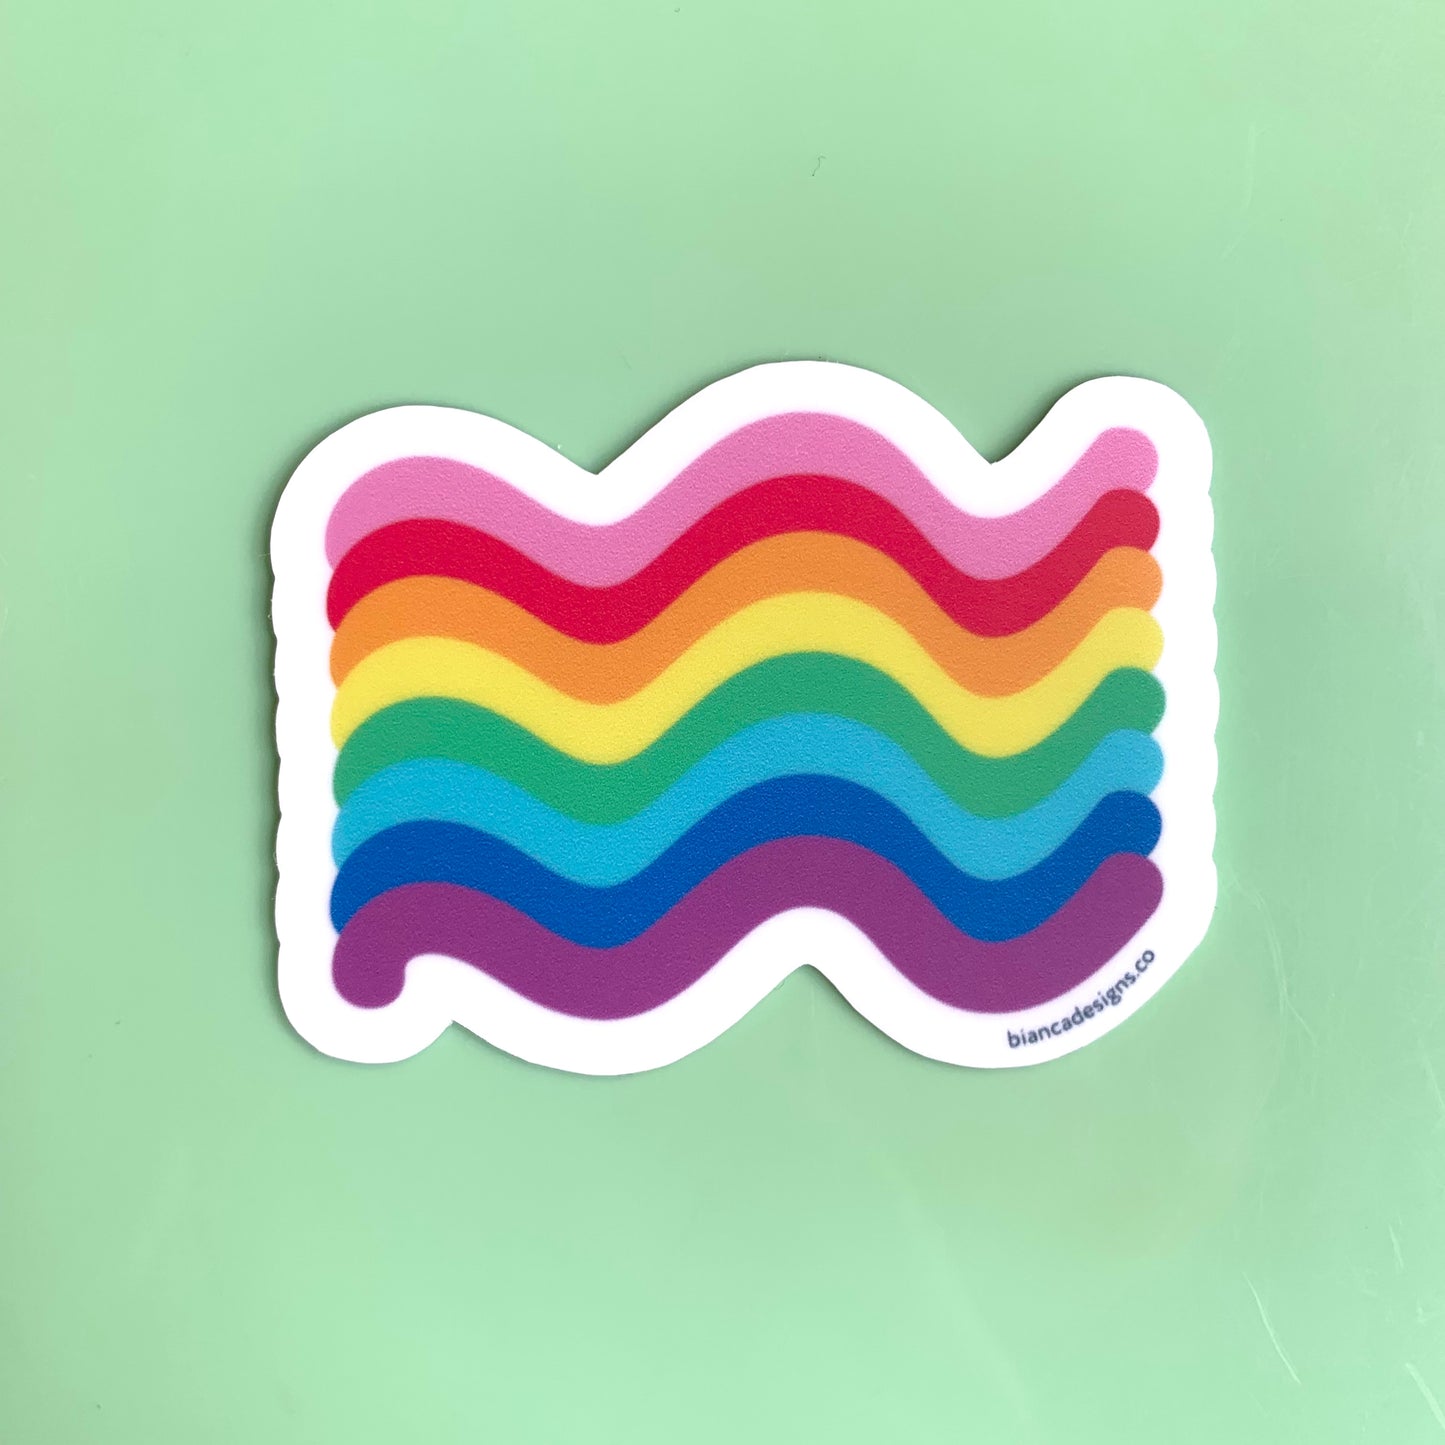 Bianca Designs: Stickers